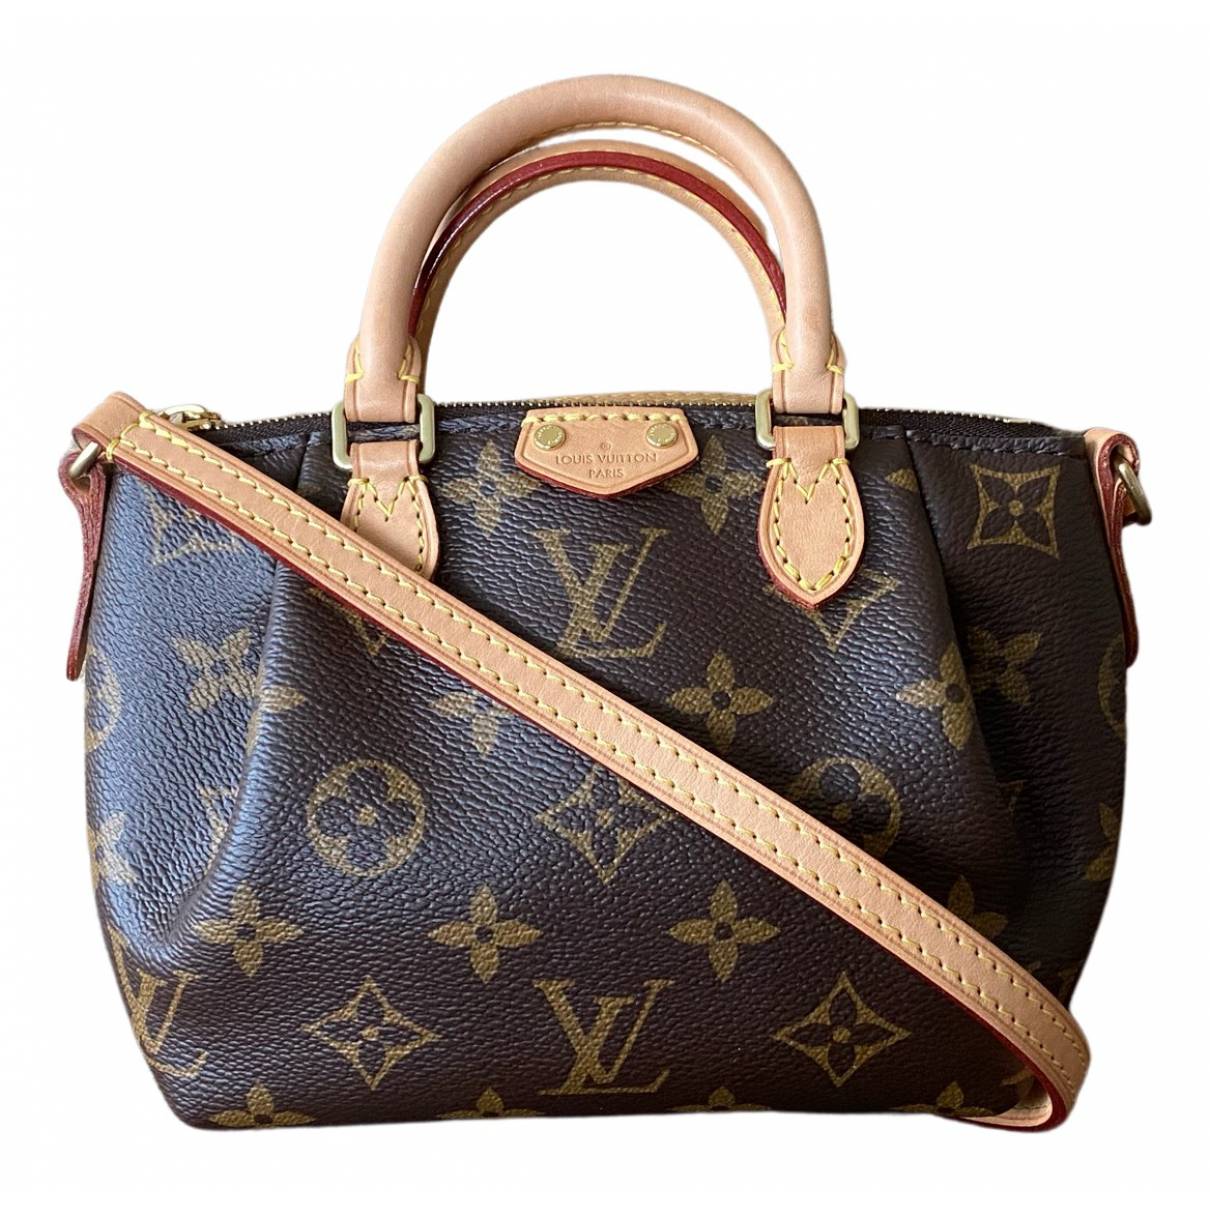 Turenne medium size handbag by Louis Vuitton <3 #carolinaherrera